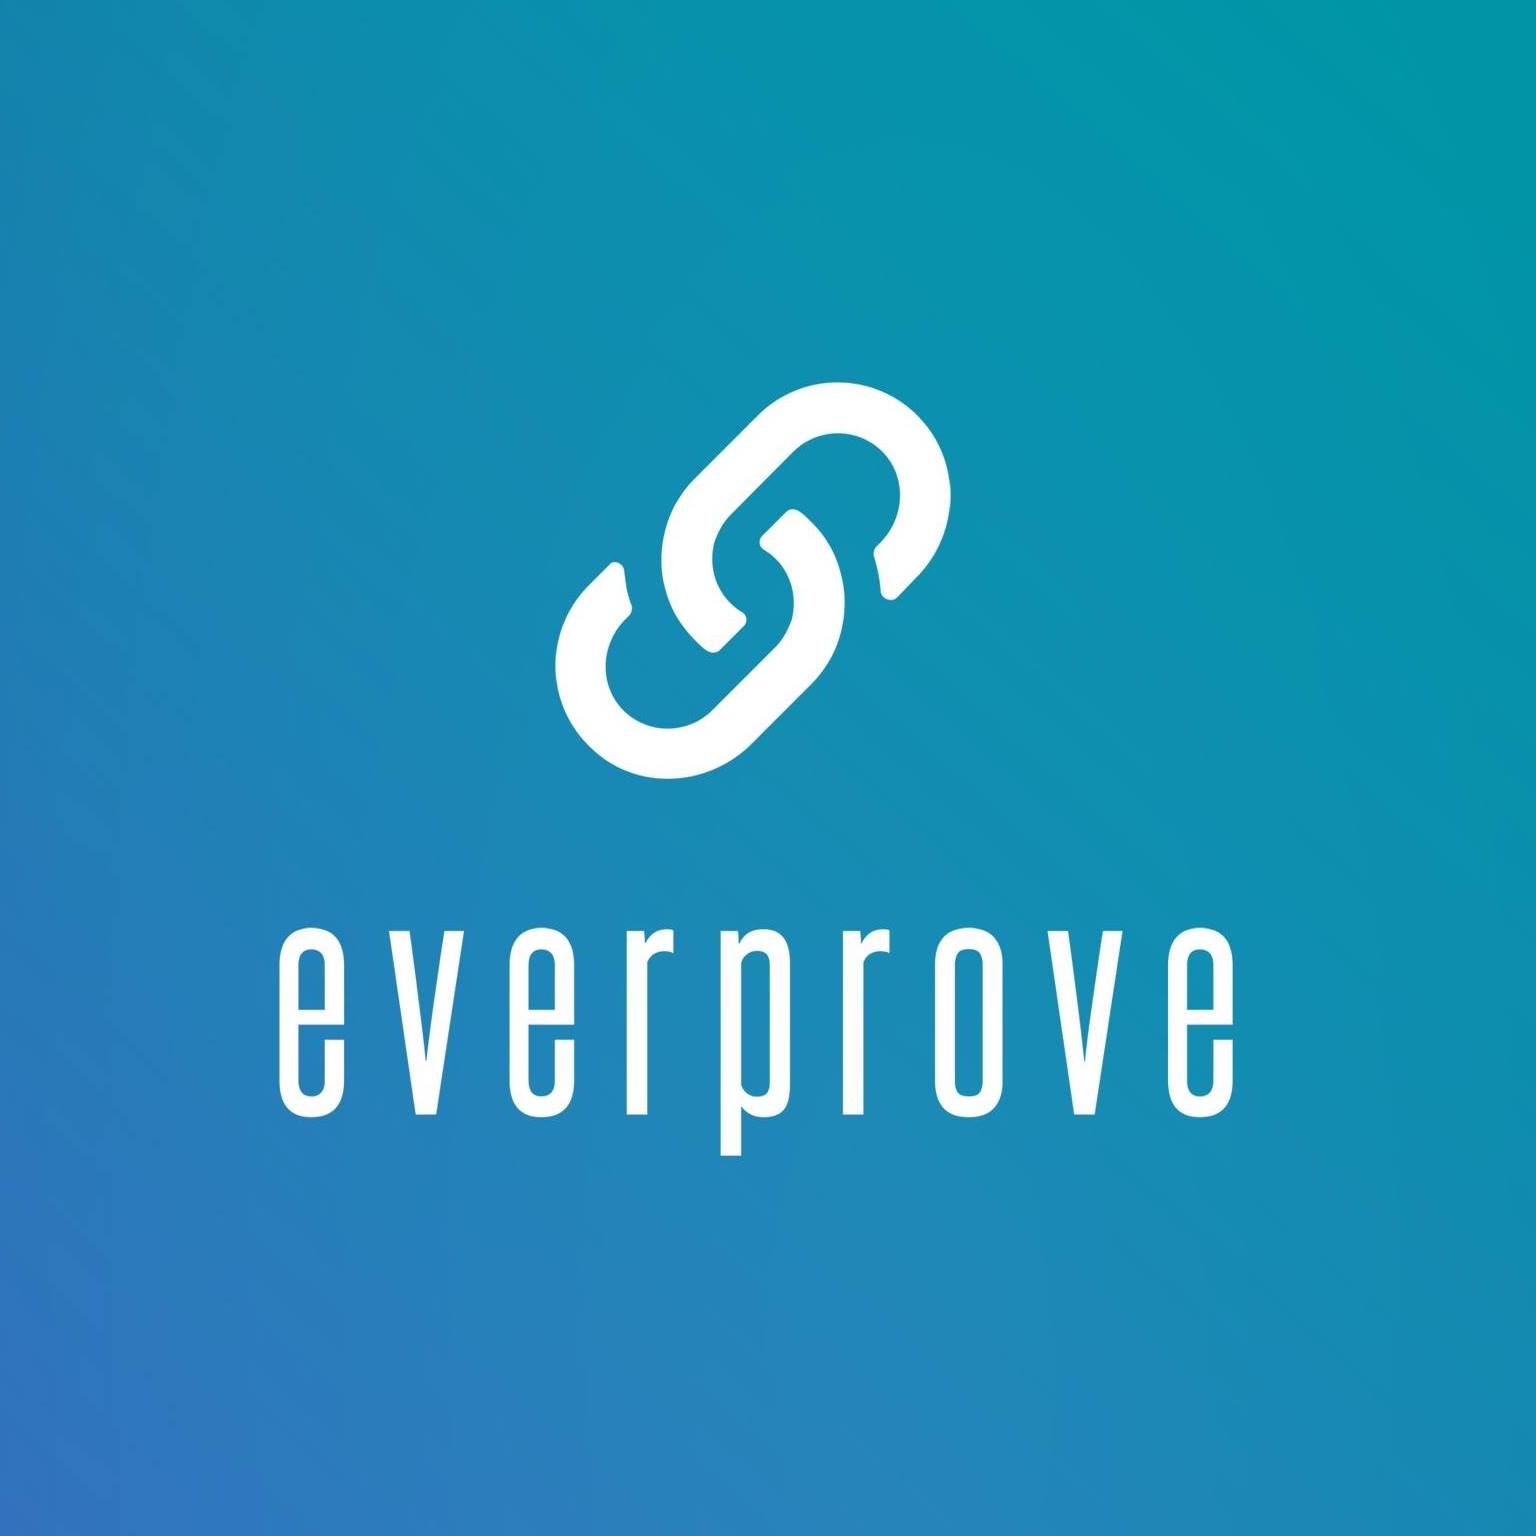 Everprove Solutions